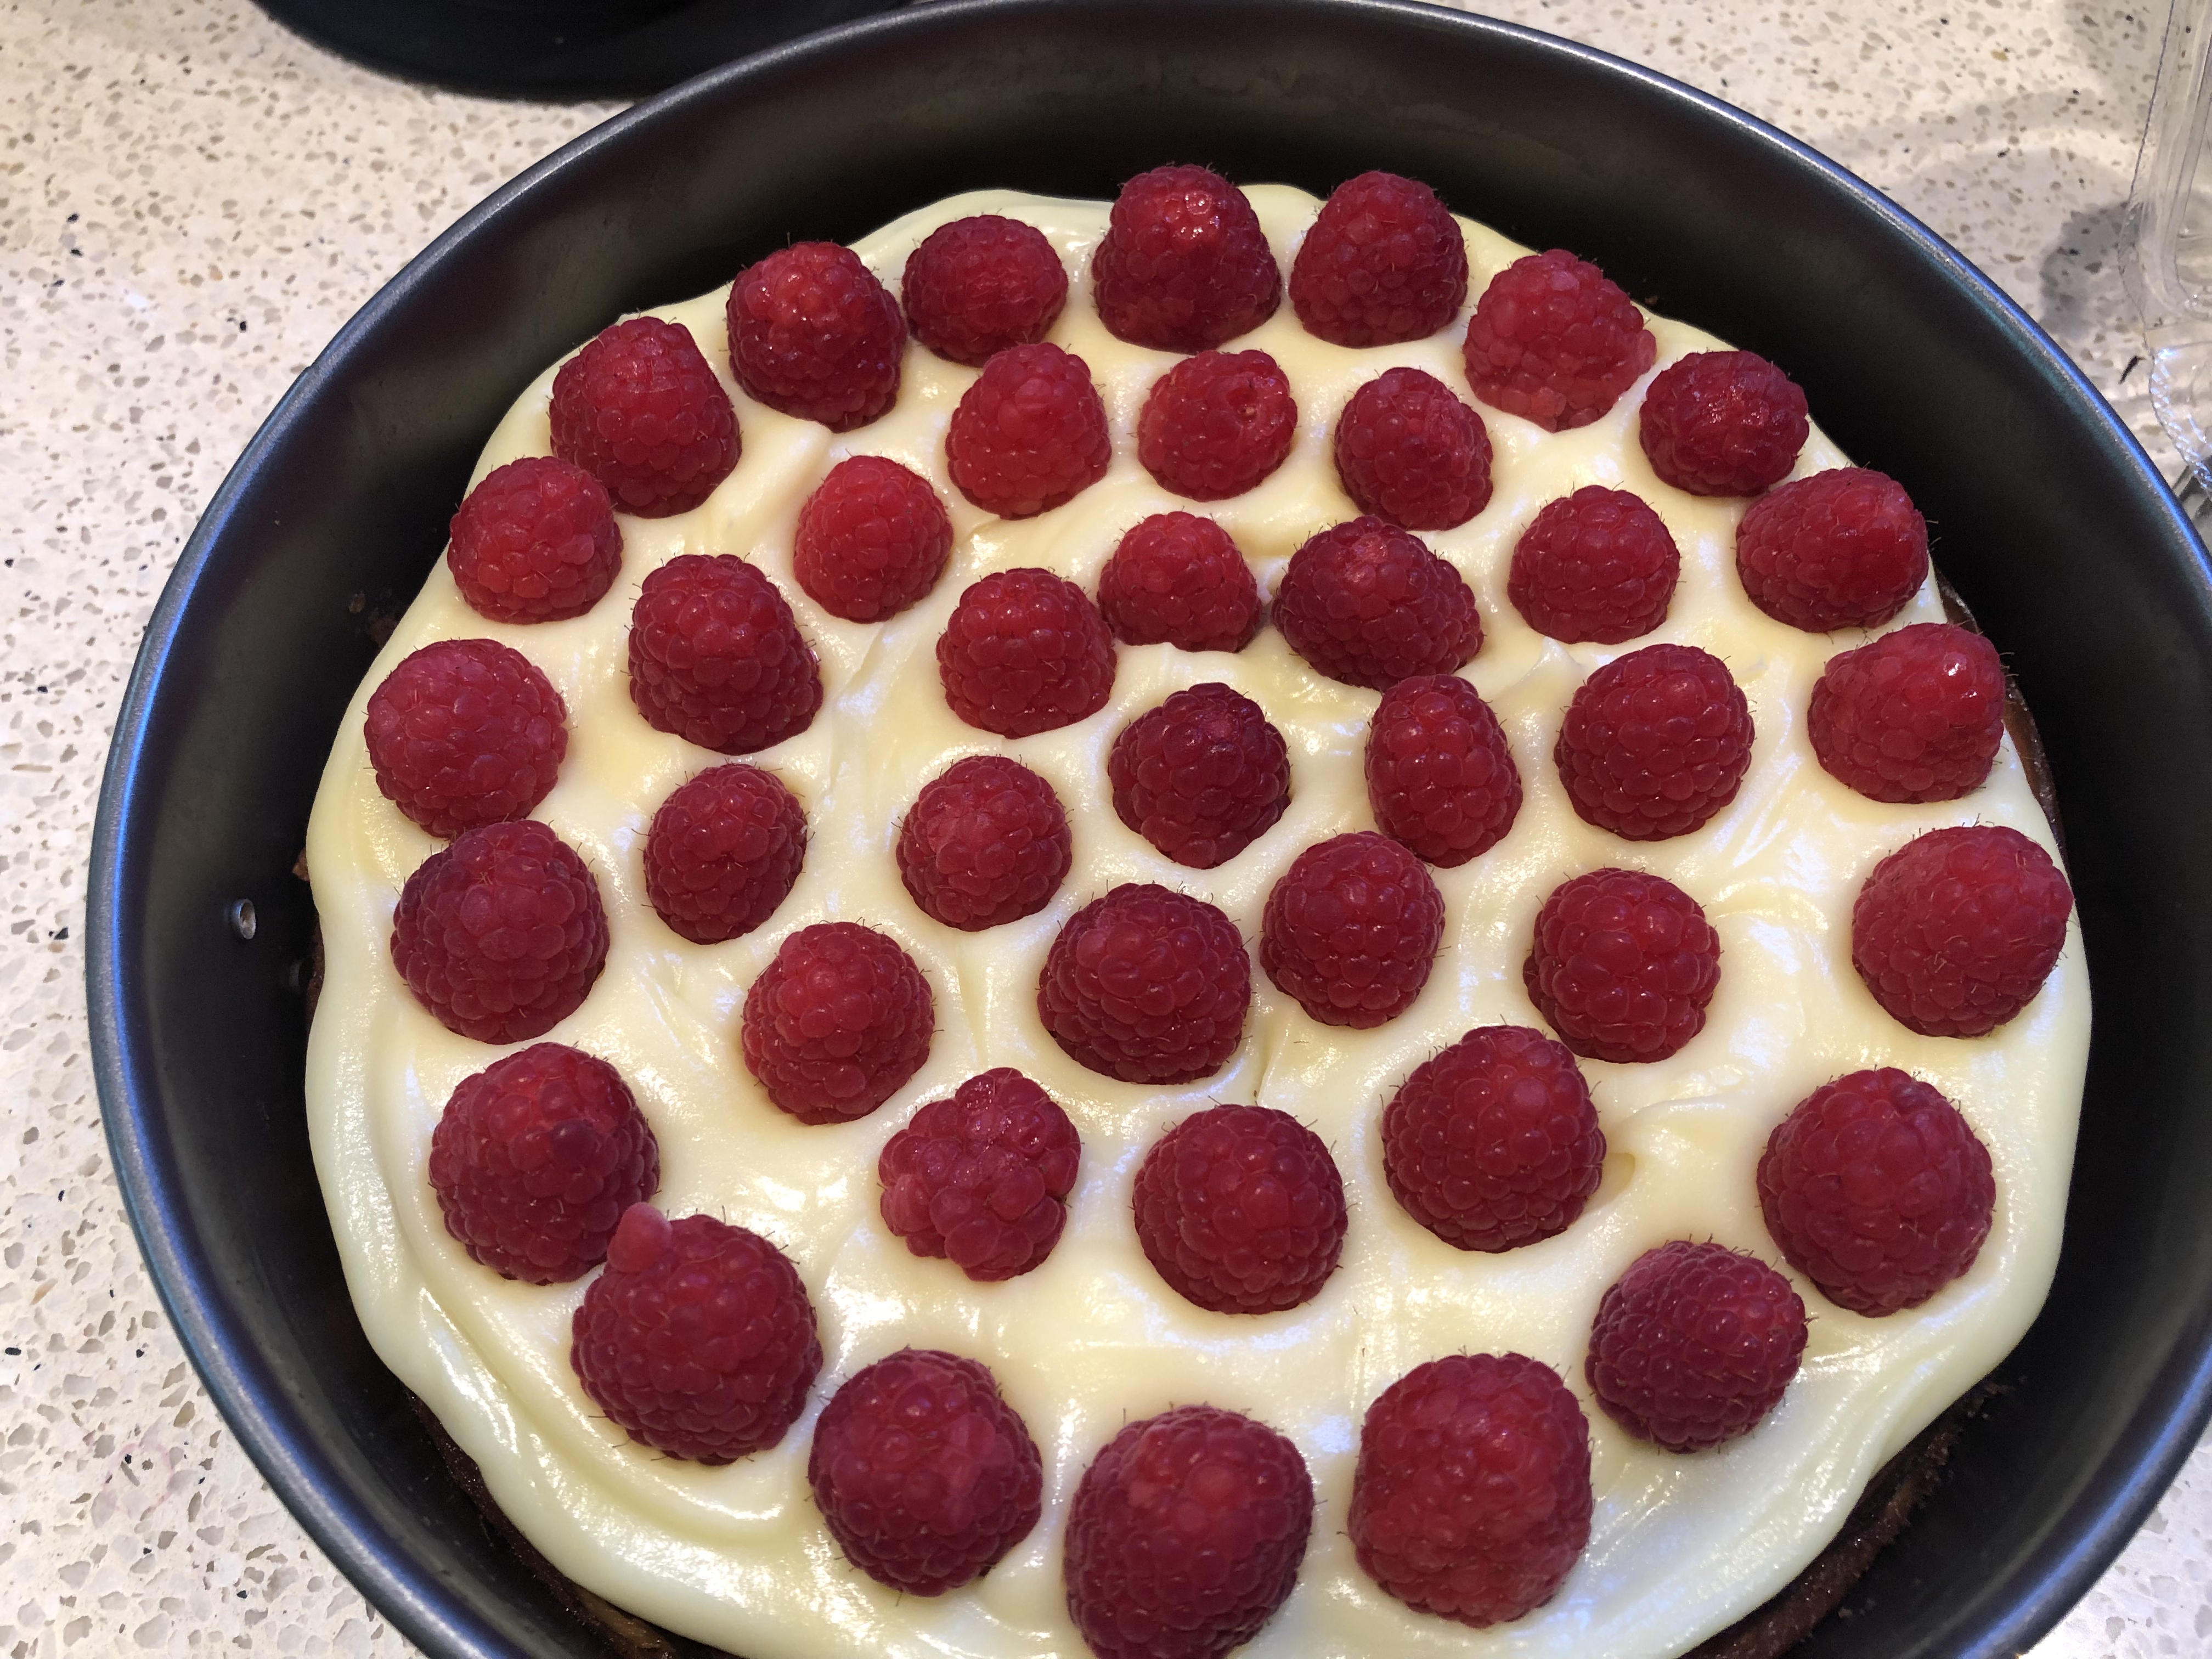 Easy Sour Cream Baked Cheesecake with White Chocolate Ganache and Fresh Raspberries